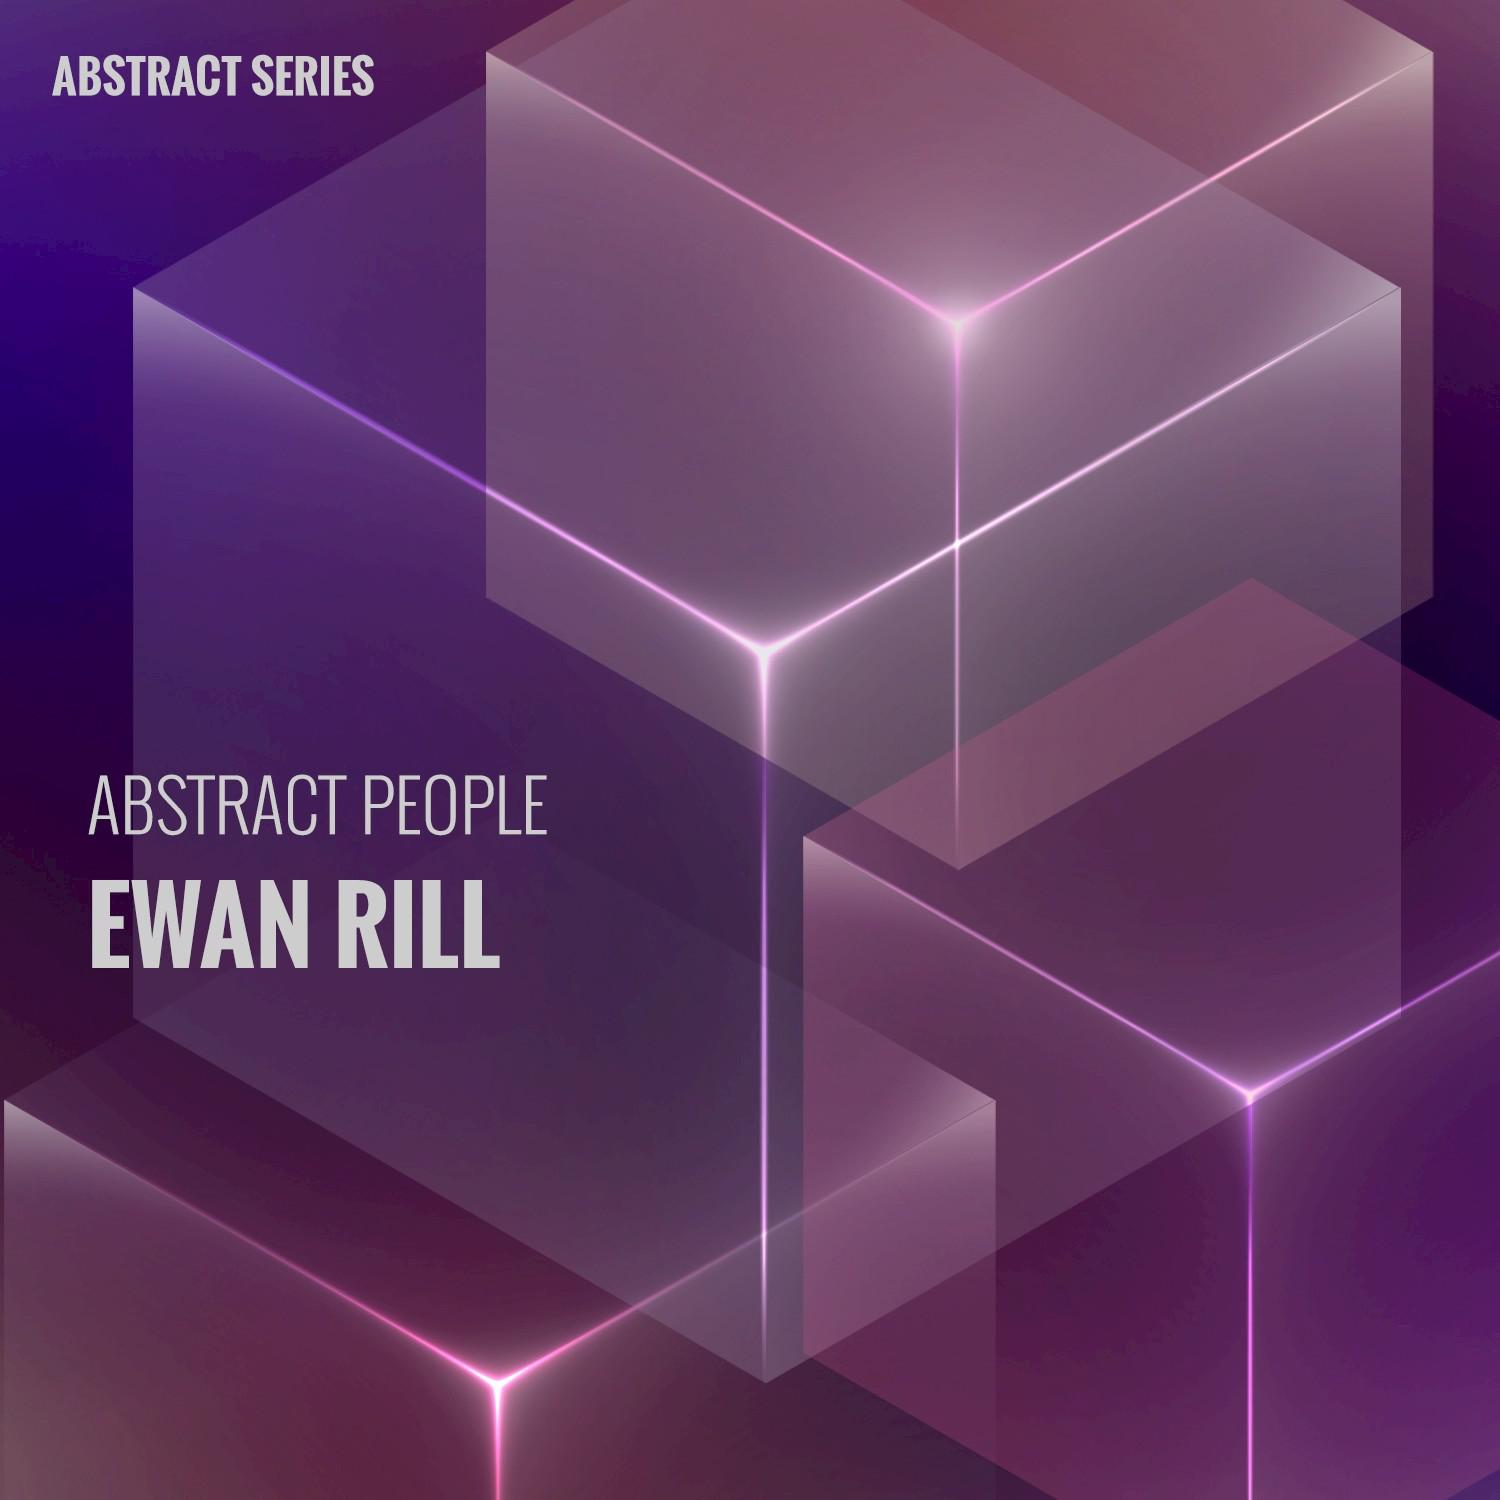 Abstract People: Ewan Rill